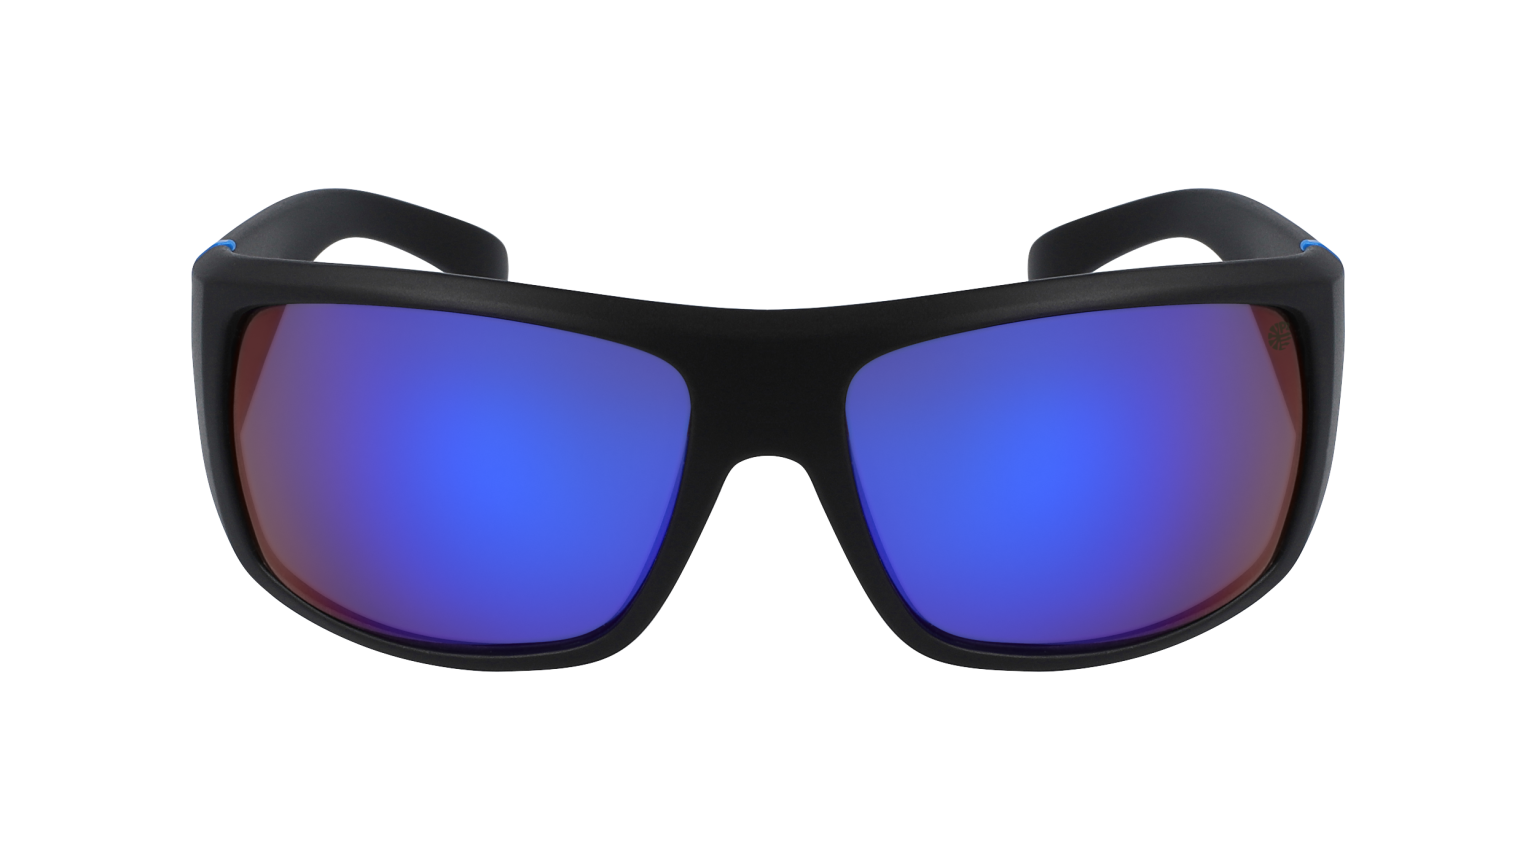 VANTAGE - Matte Black H2O with Polarized Lumalens Blue Ionized Lens